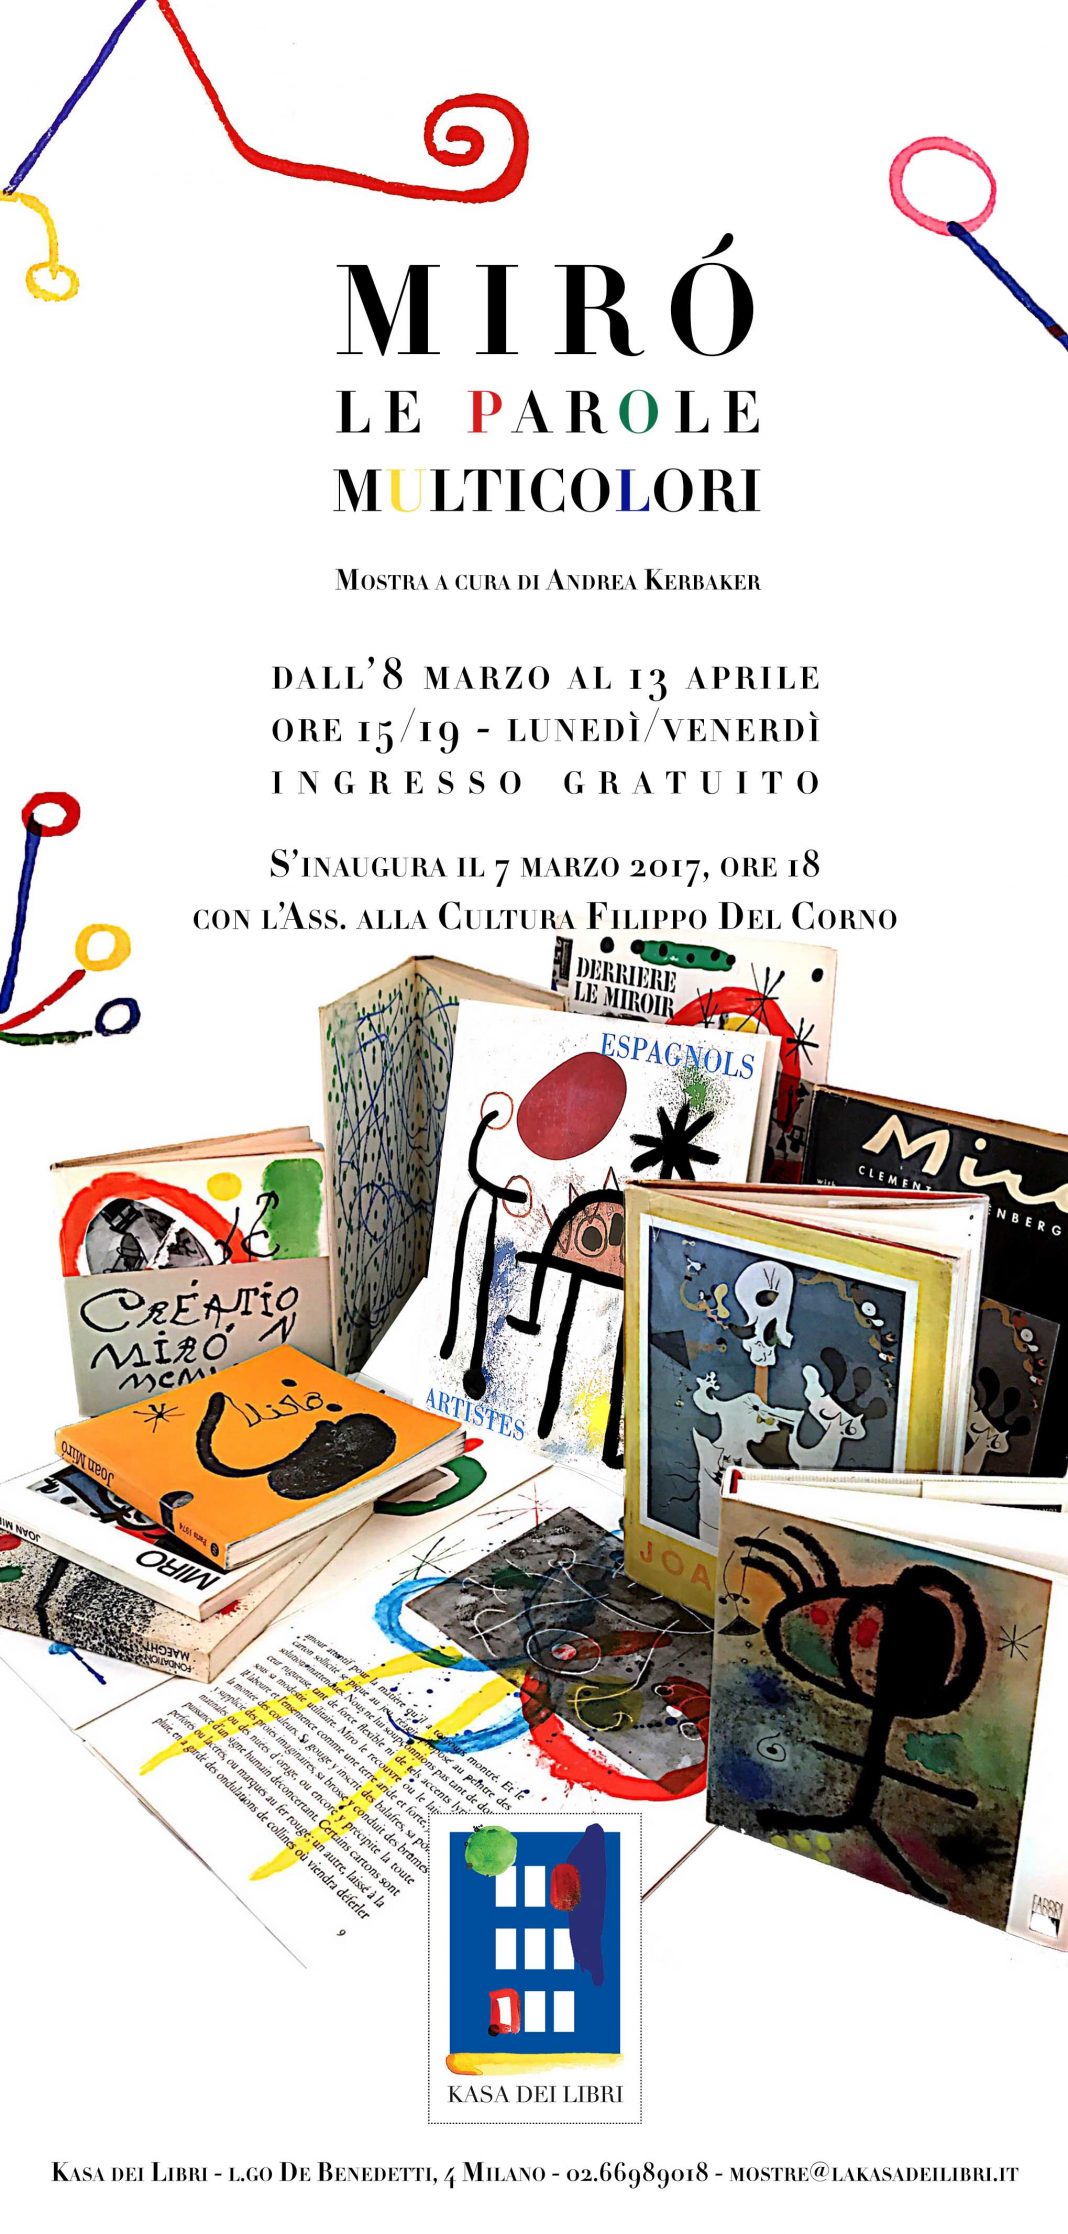 Miró – Le parole multicolorihttps://www.exibart.com/repository/media/eventi/2017/03/miró-8211-le-parole-multicolori-1068x2234.jpg